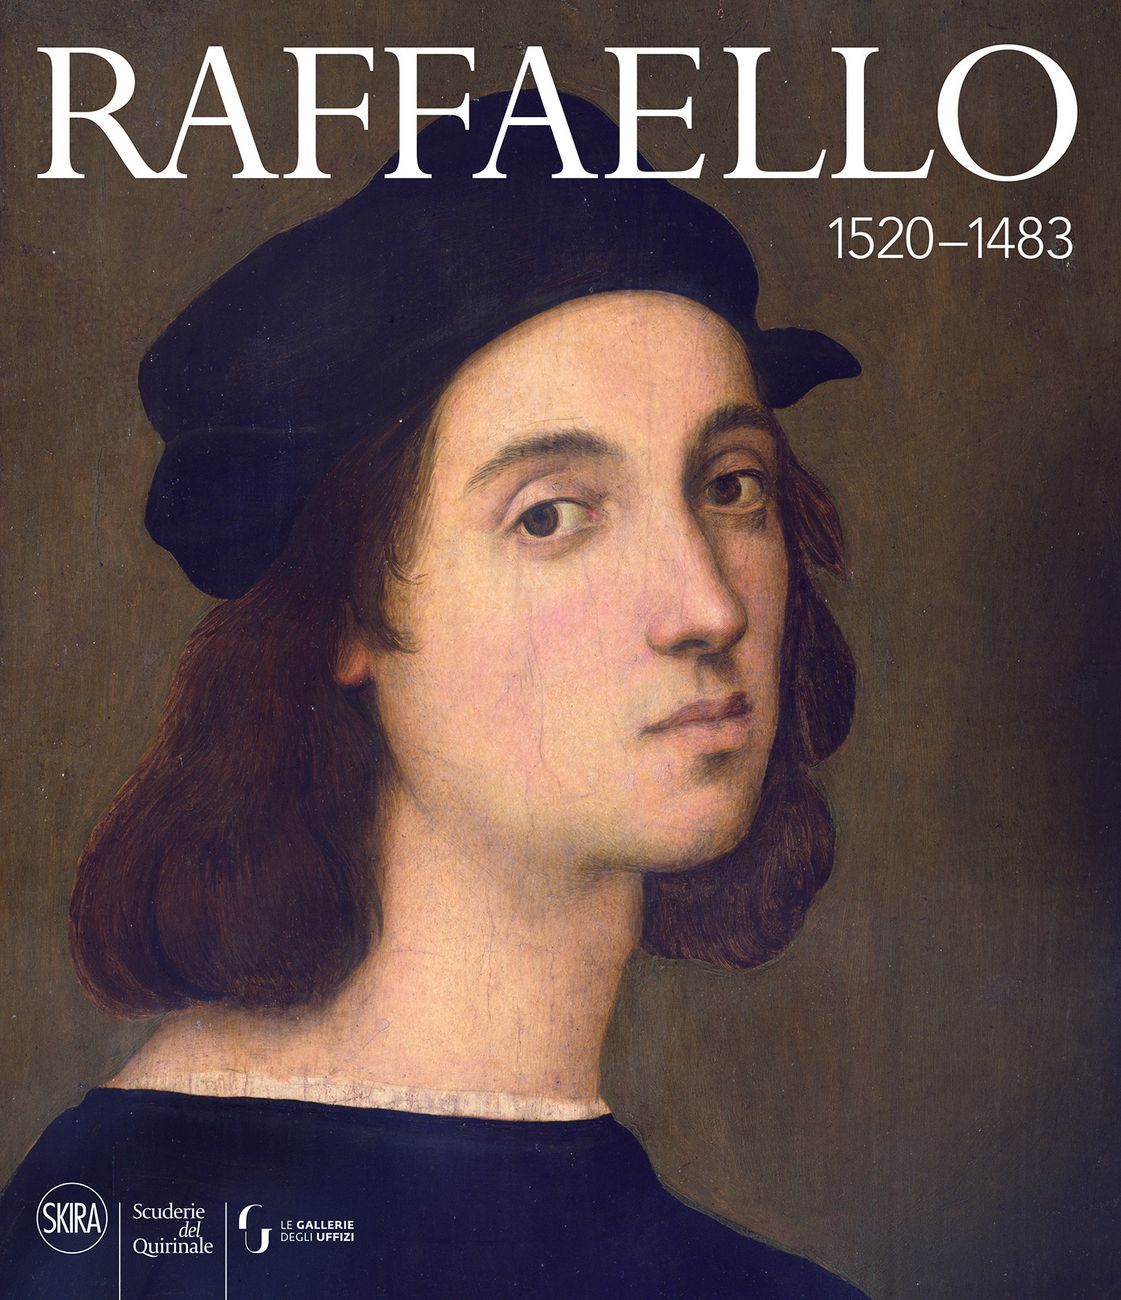 Raffaello 1520-1483 (Skira, Milano 2020)